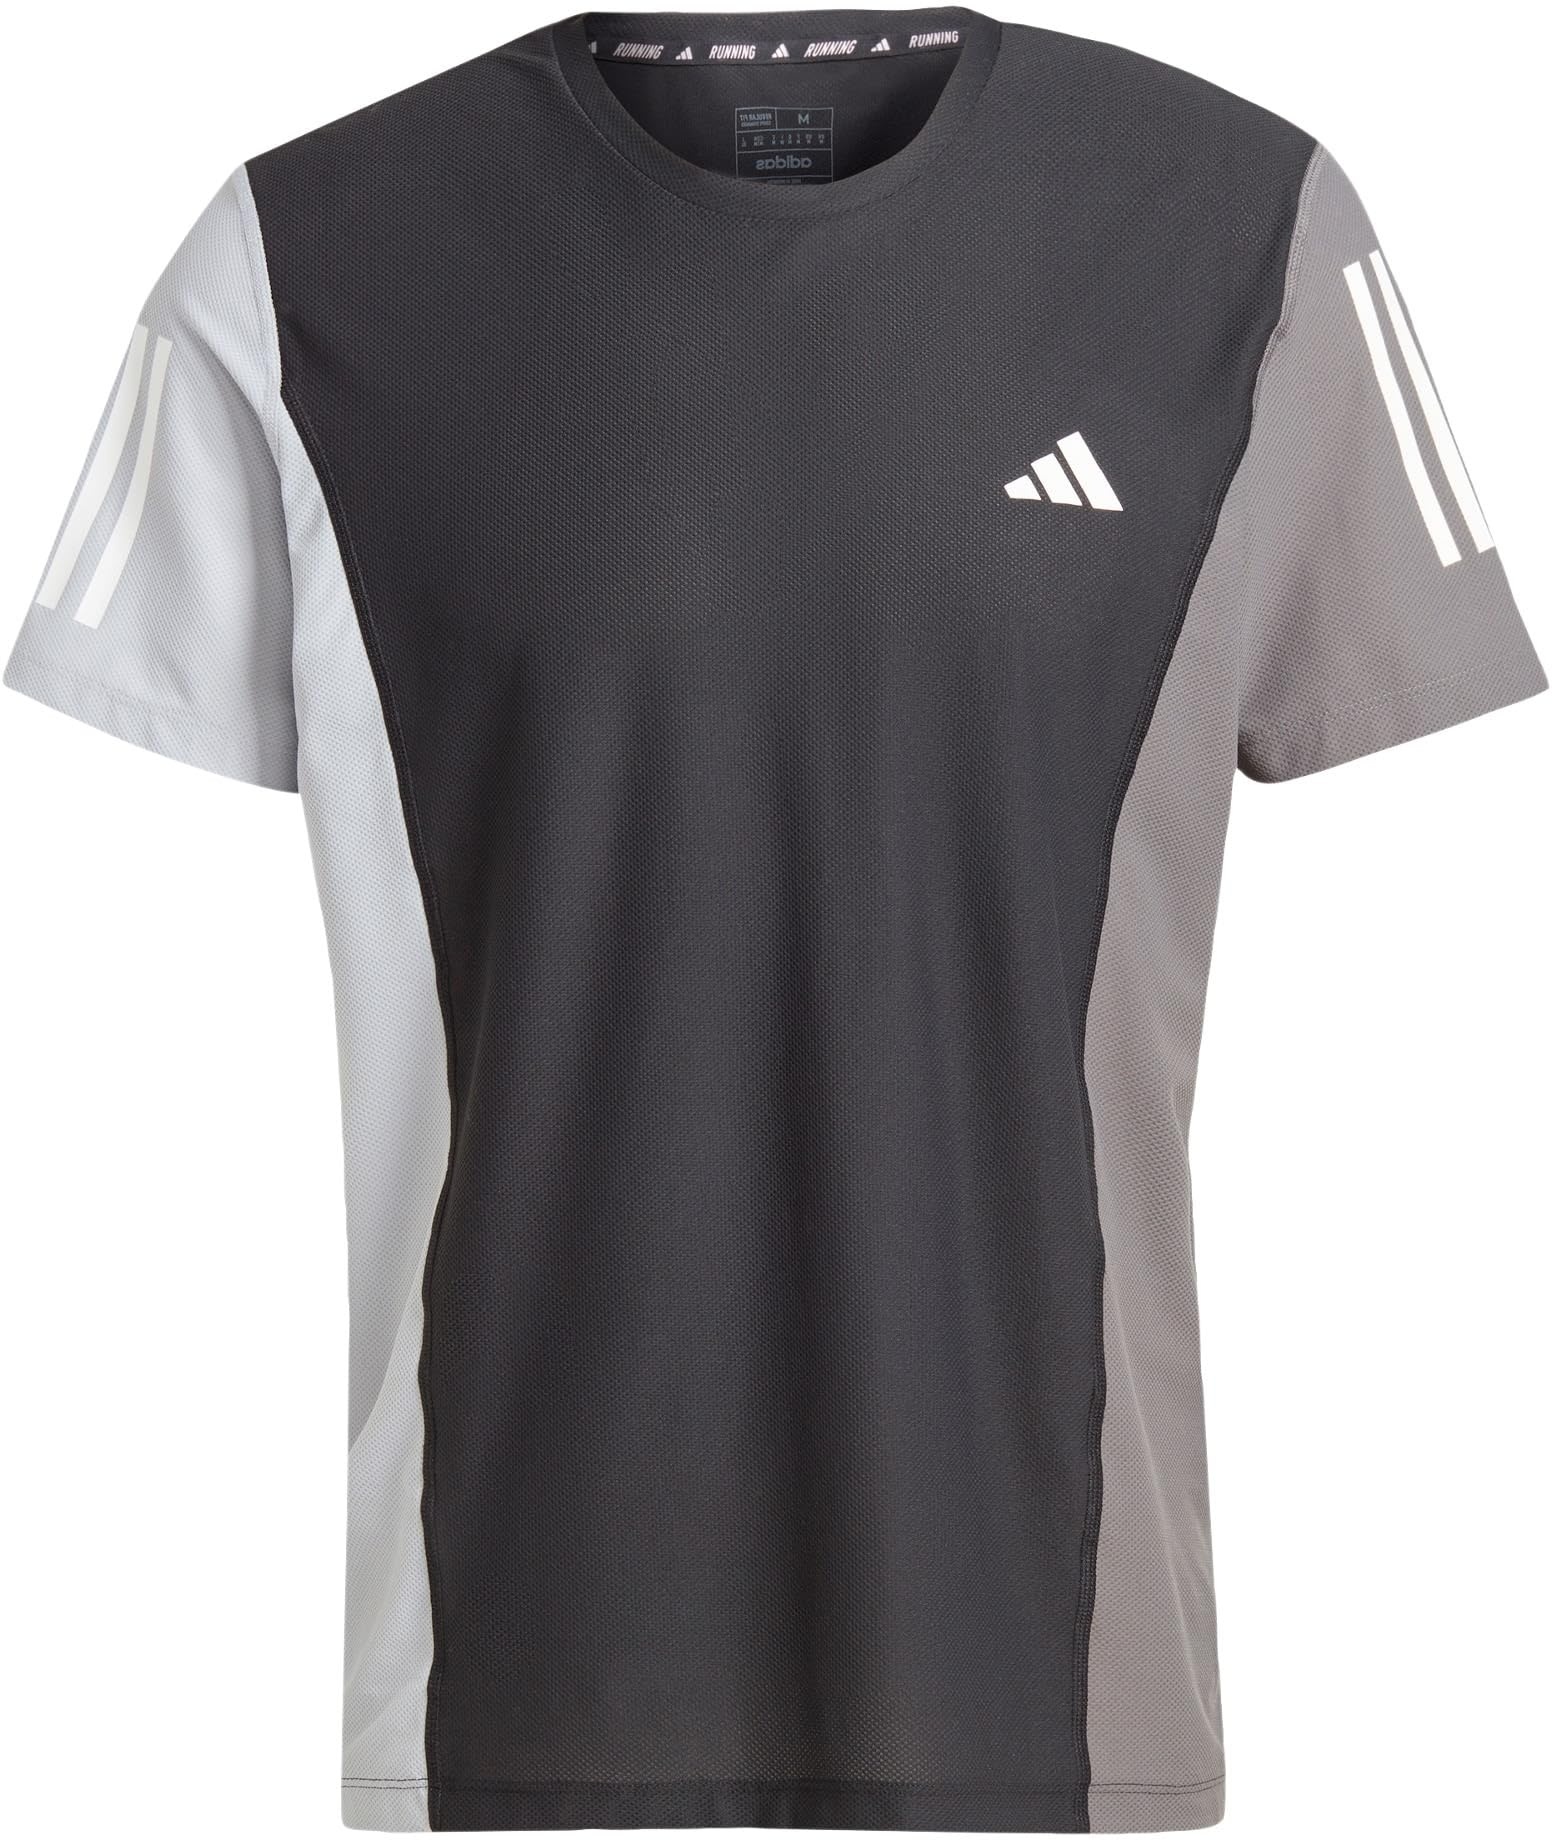 adidas Men's Own The Run Colorblock Tee T-Shirt, Black/Halo Silver/Grey Five, M Tall